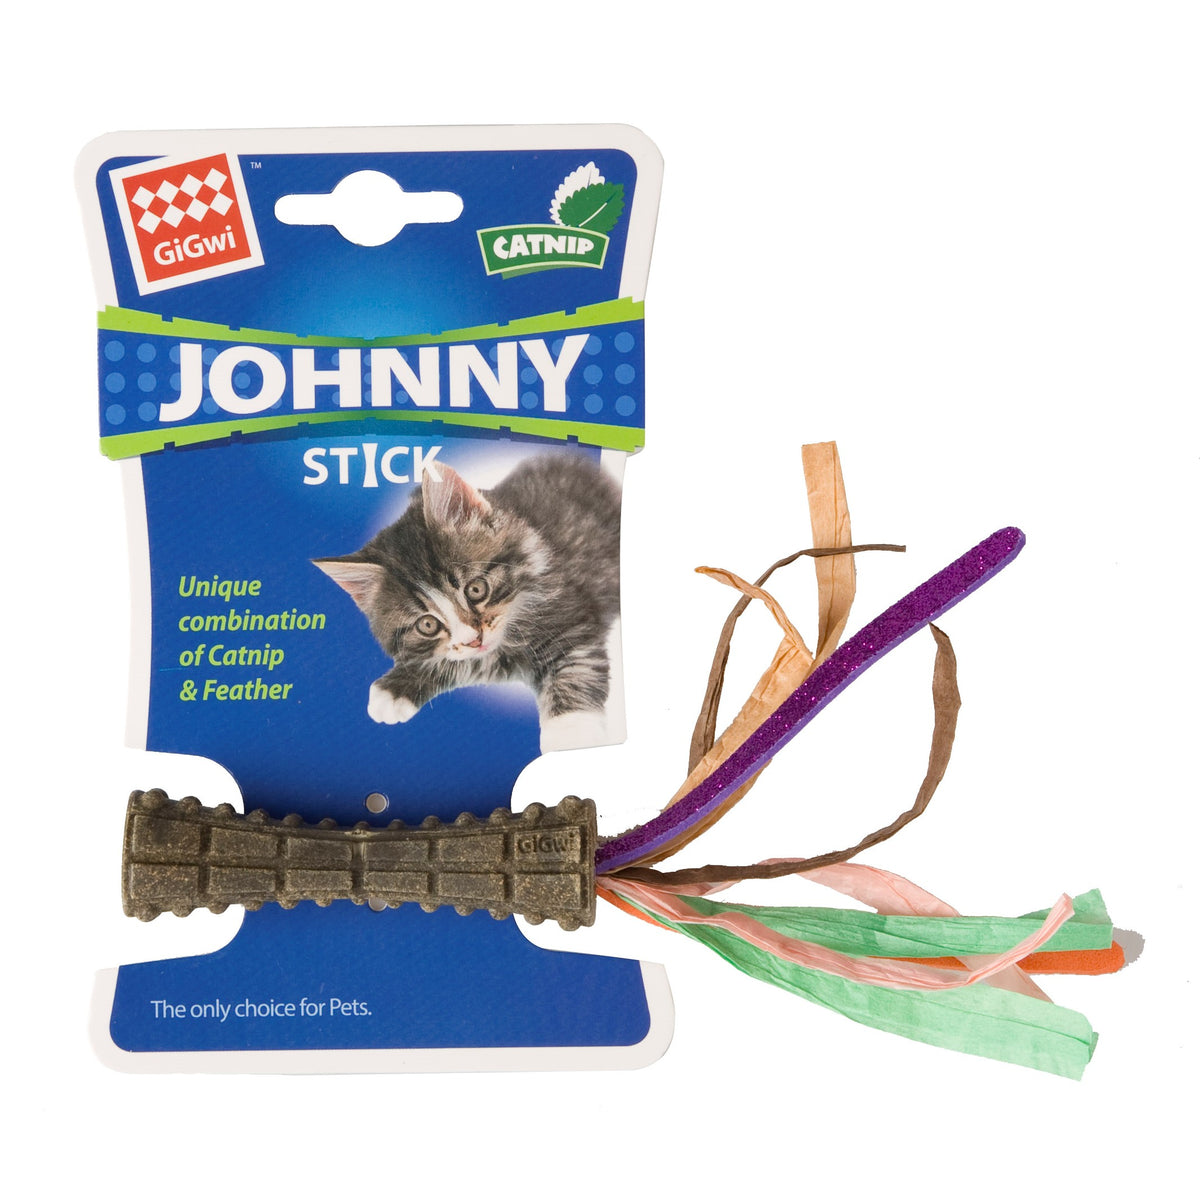 GiGwi Catnip Johnny Stick